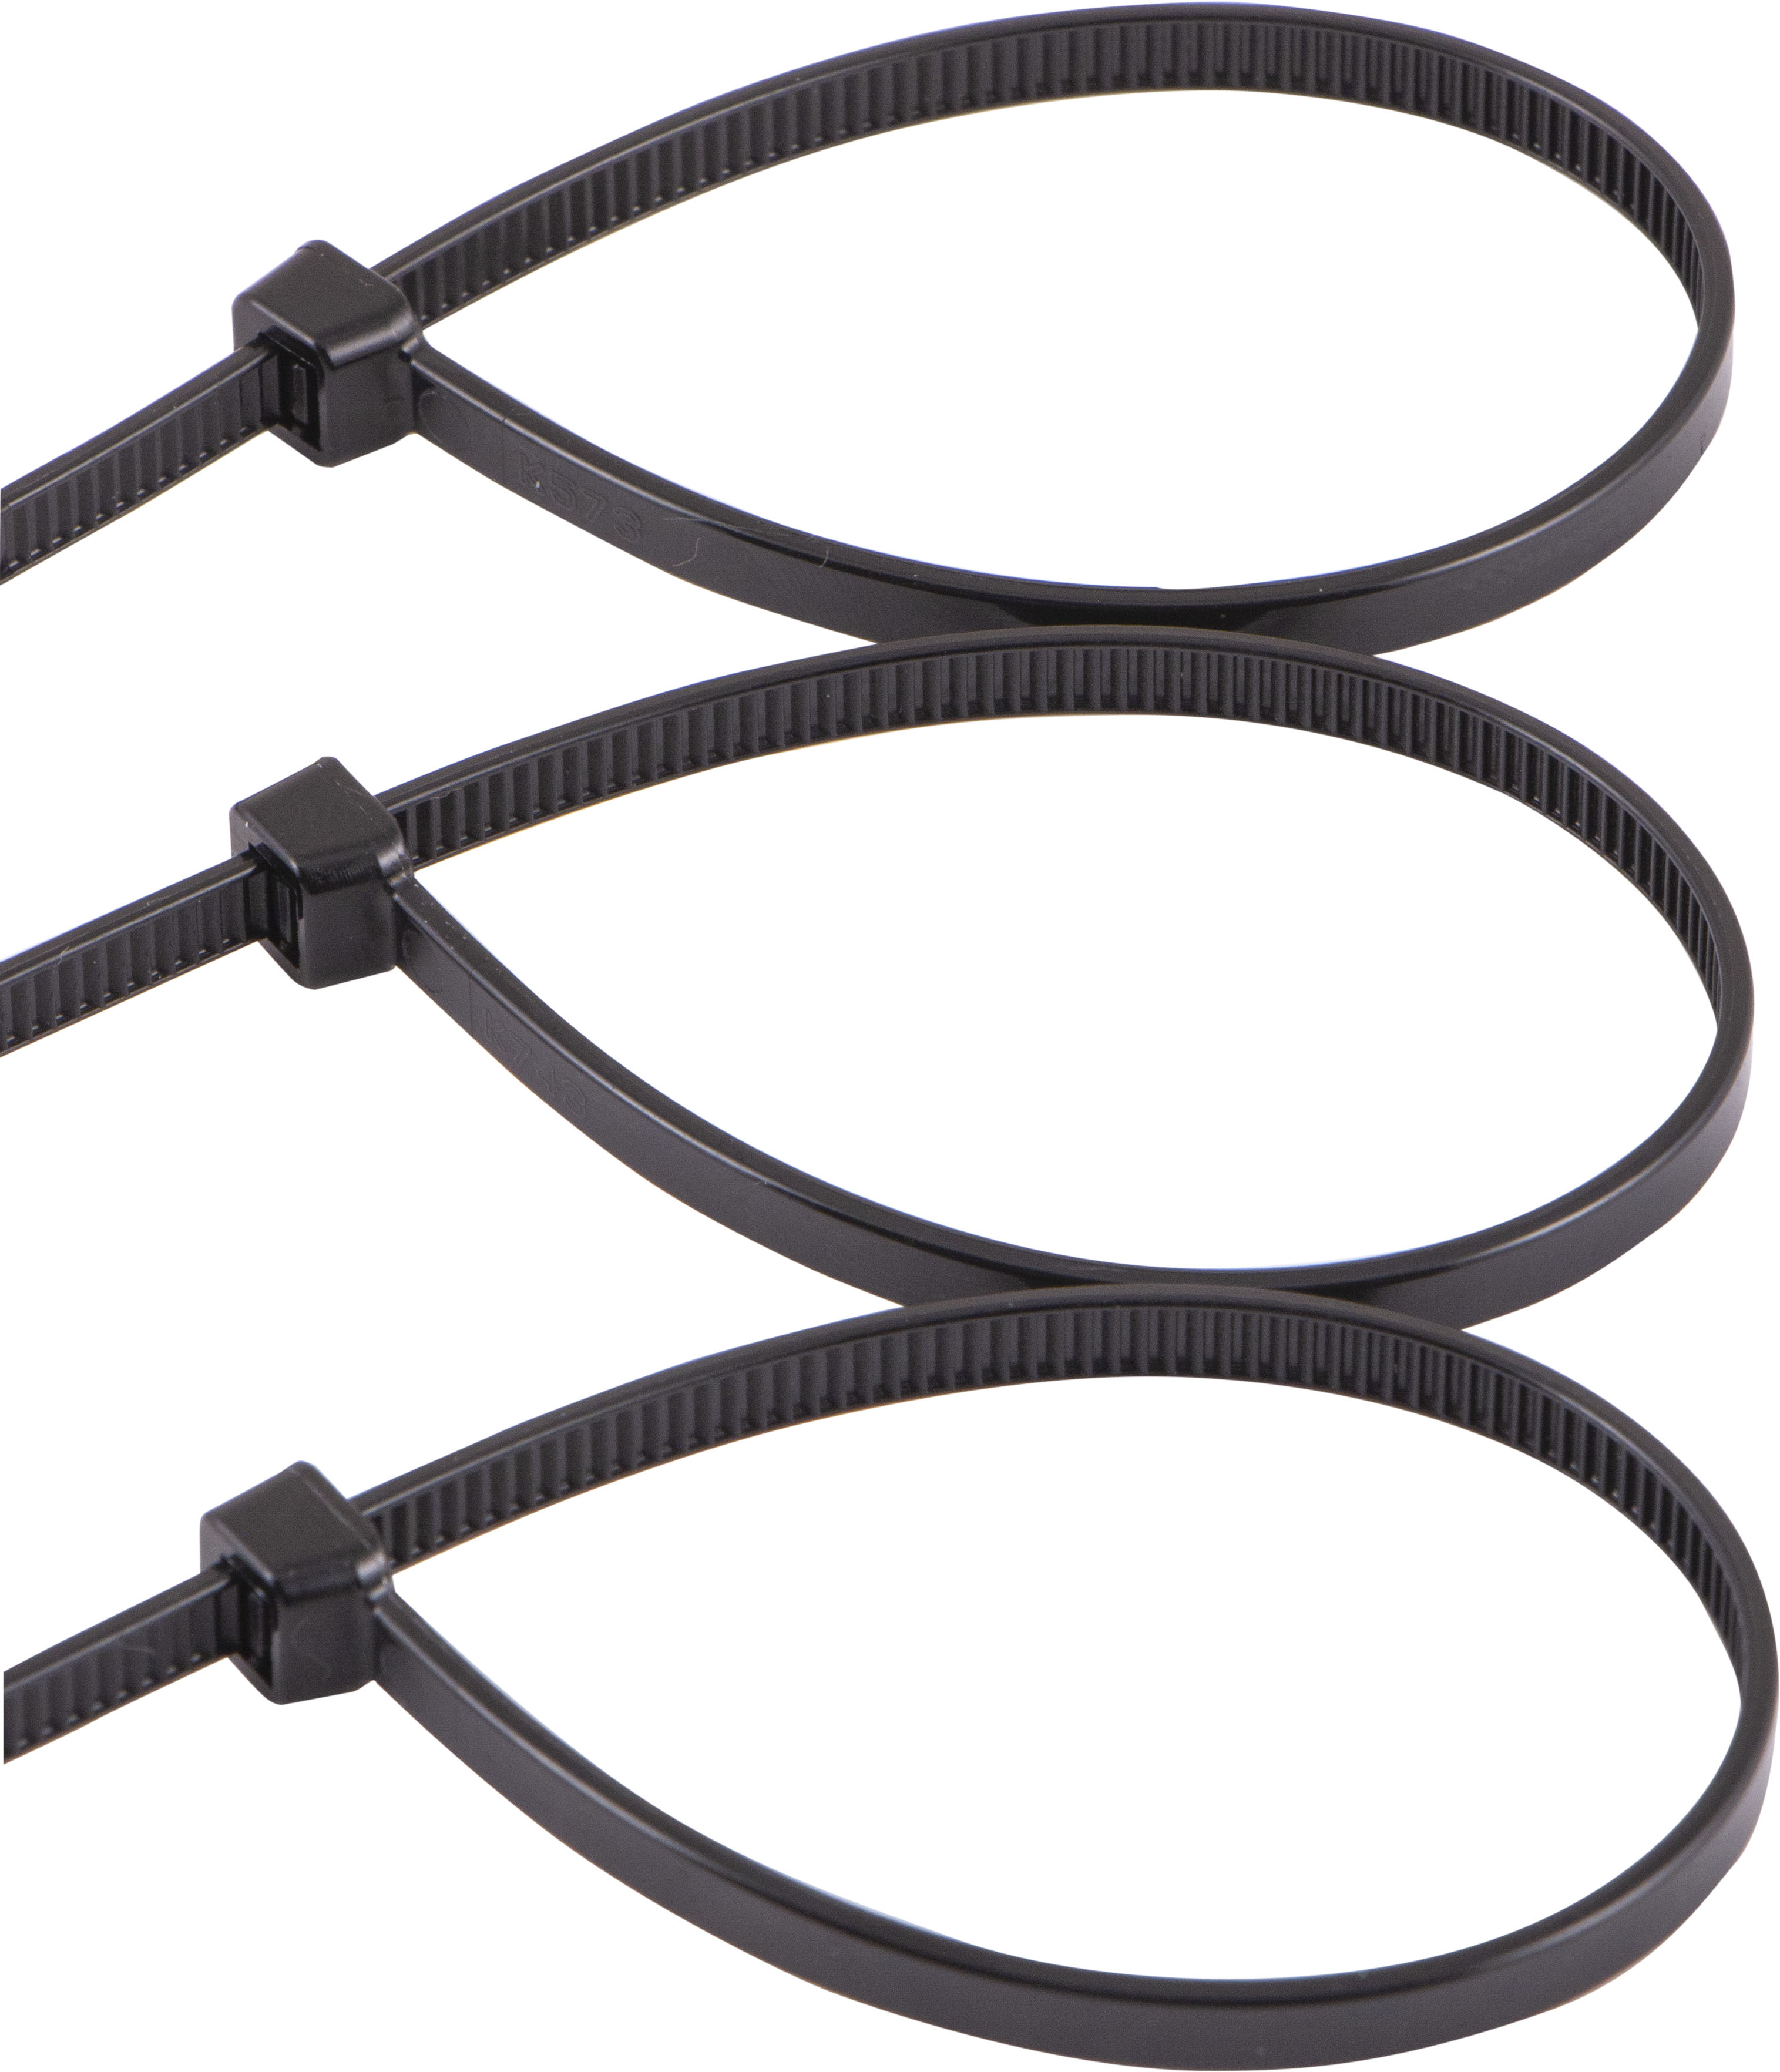 Hyper Tough 11in. Black Zip Ties 100 Pack, 75lb Tensile Strength, Nylon Mount Cable Ties, Resealable Bag, 25469 - image 4 of 7